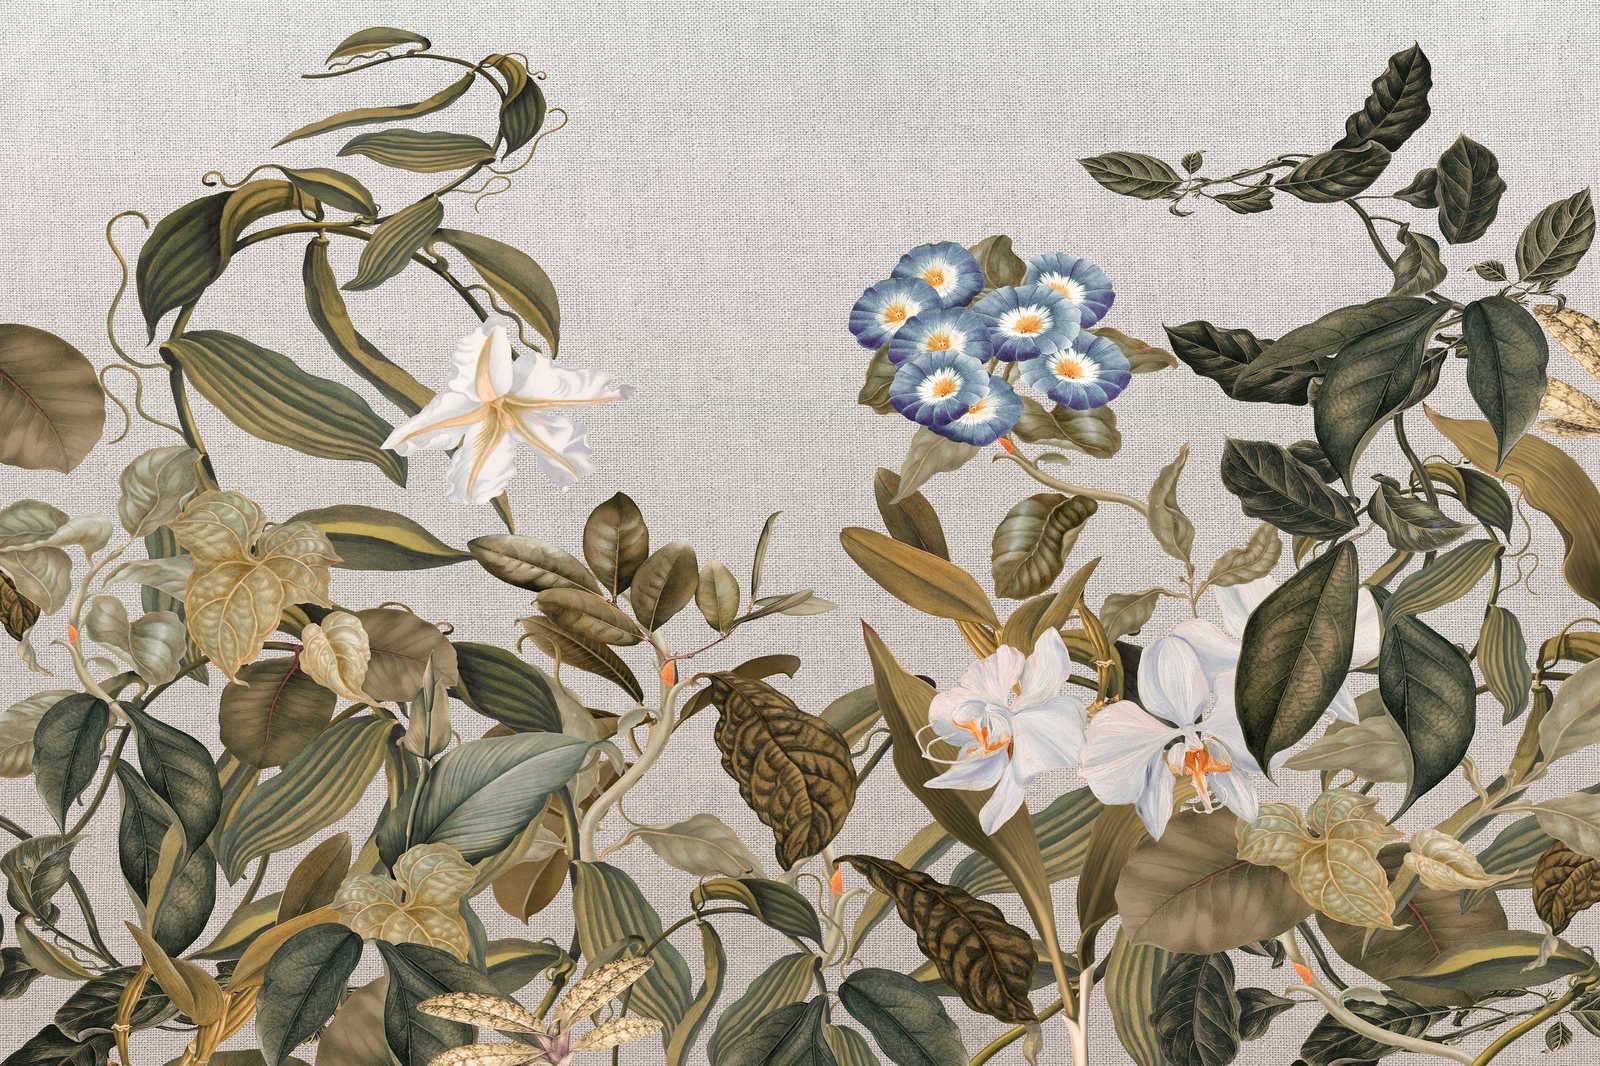             Leinwandbild Botanical Stil Blüten, Blättern & Textil-Look – 0,90 m x 0,60 m
        